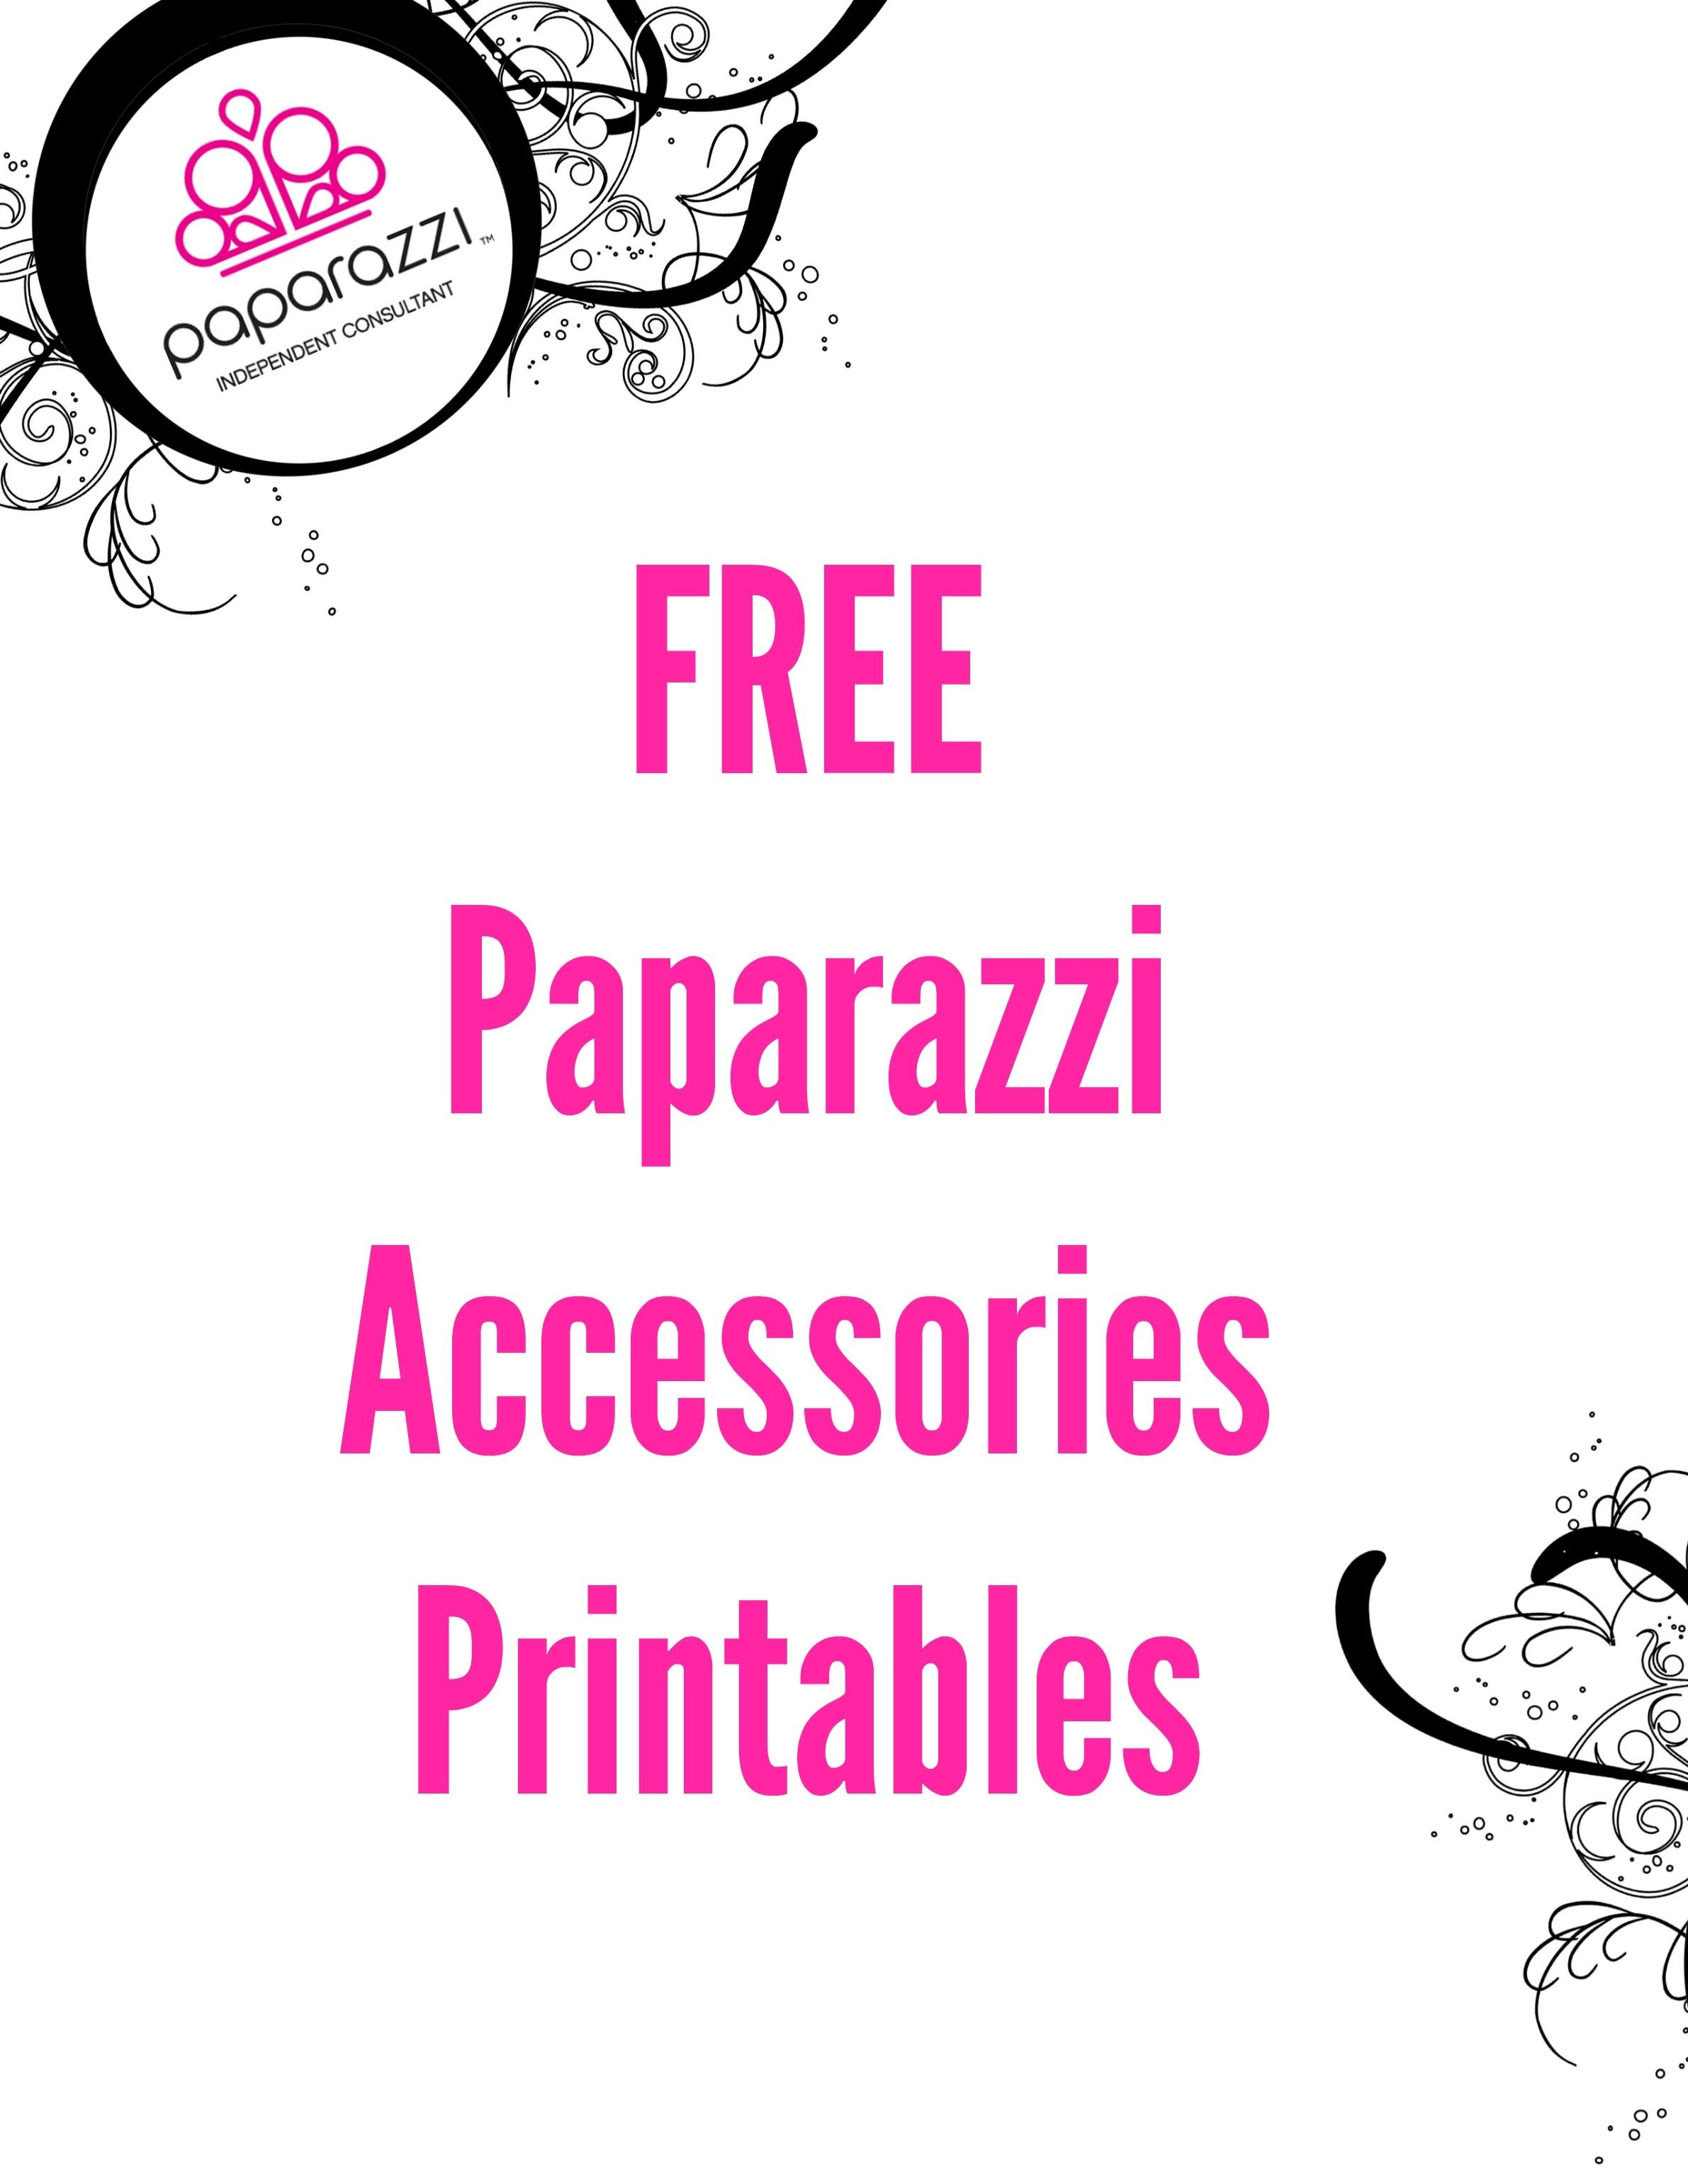 Free Paparazzi Accessories Printables | Paparazzi Accessories - Free Printable Mirrored Numbers